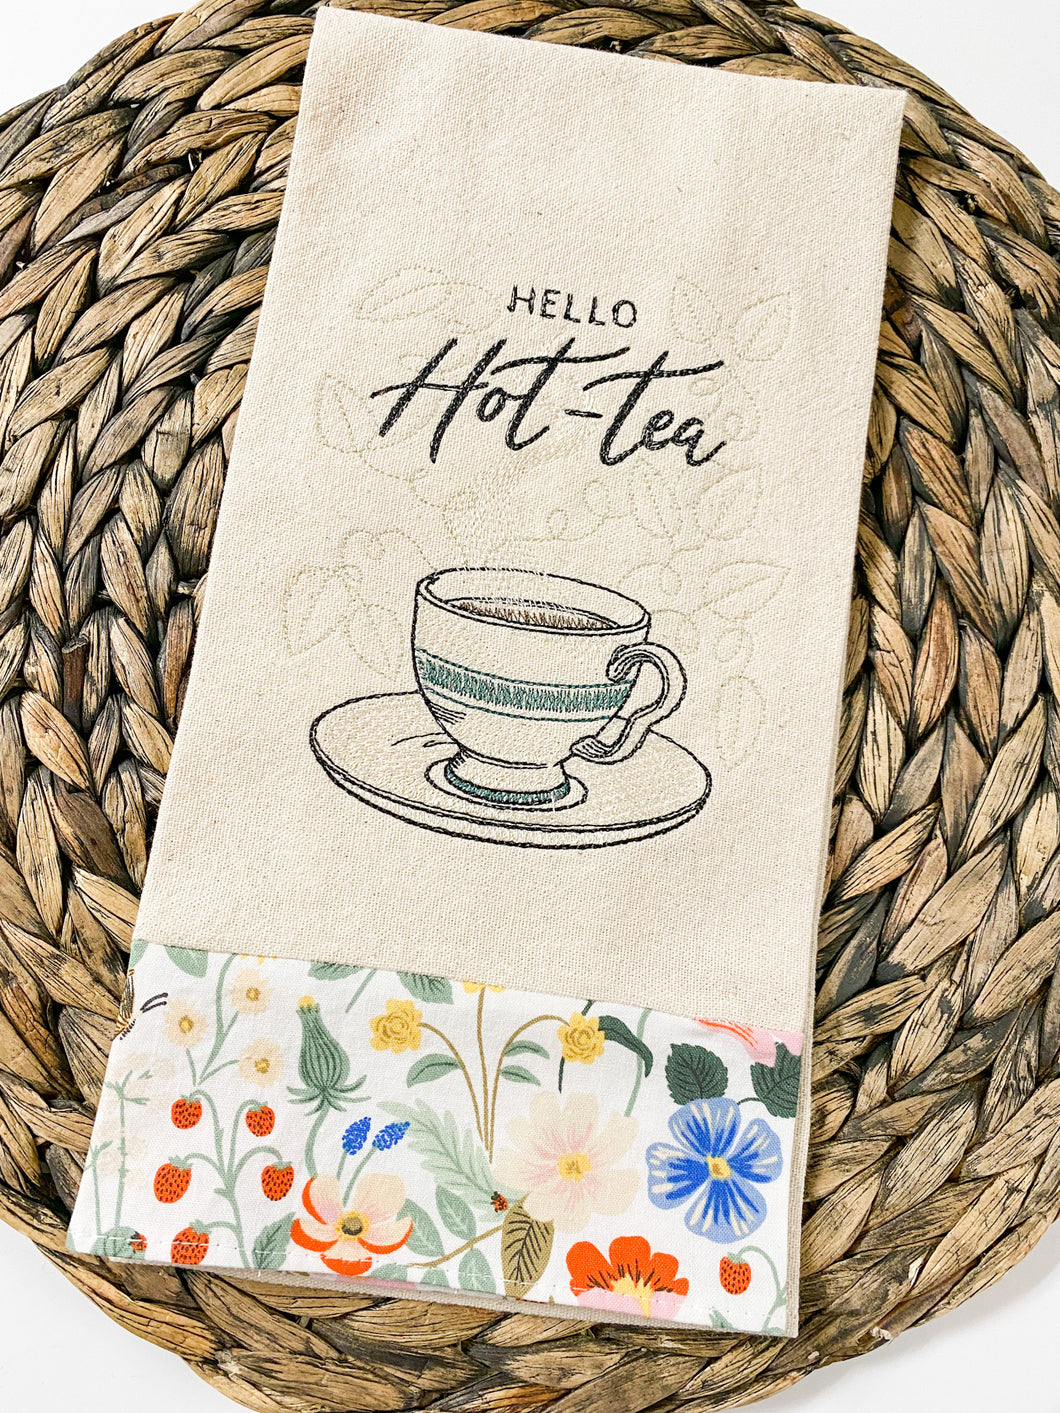 Hello Hot-Tea Tea Towel